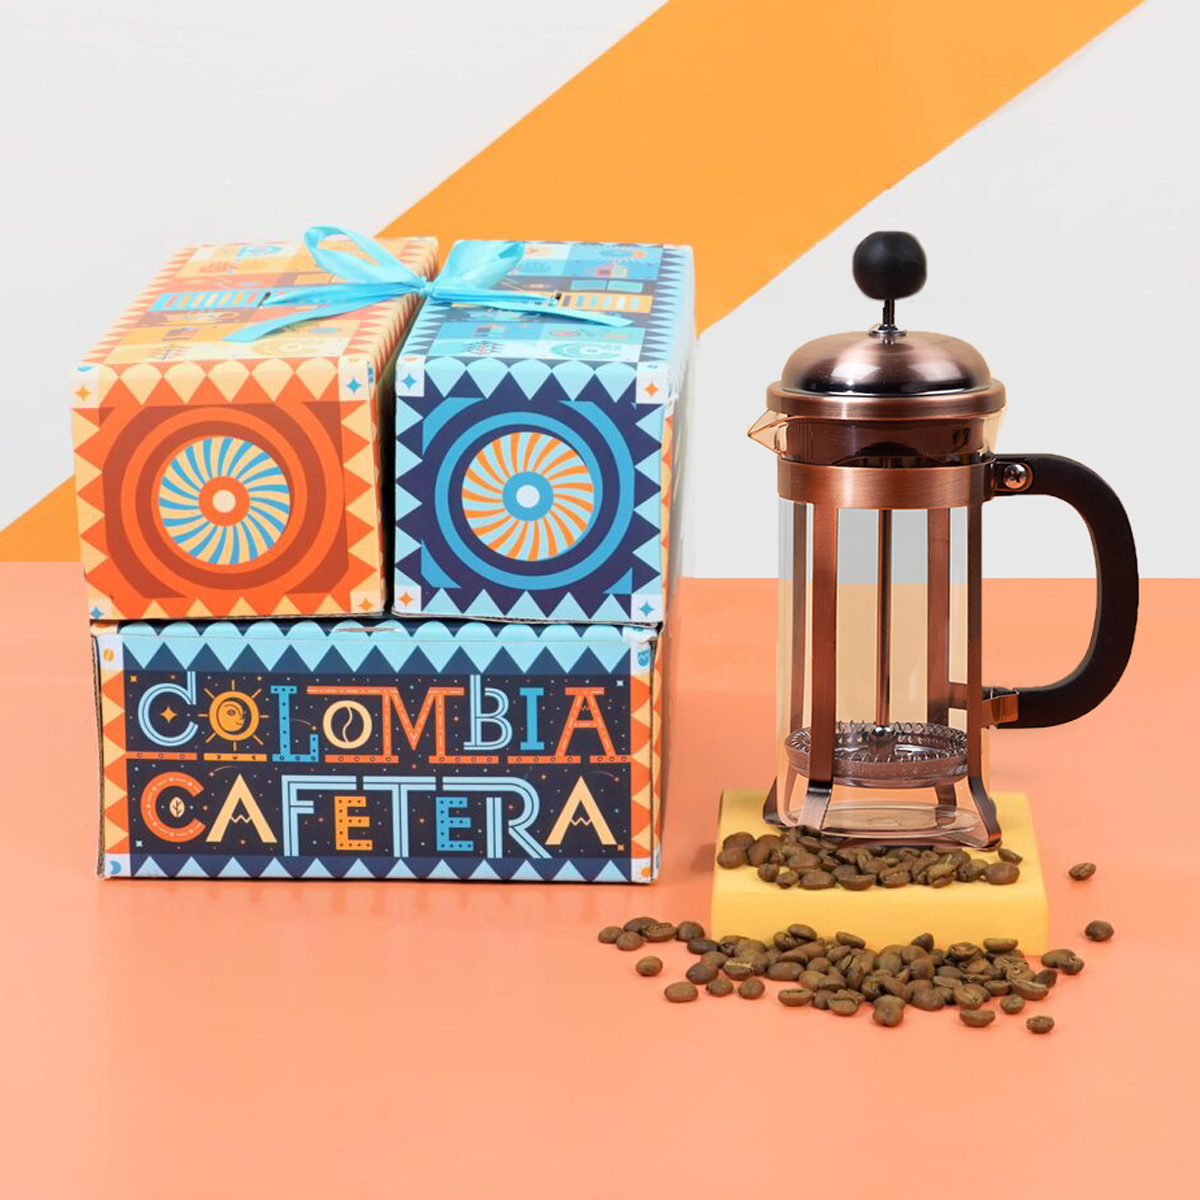 kit colombia cafetera prensa cobre - Kit Colombia Cafetera: molino, prensa cobre, café y cuchara